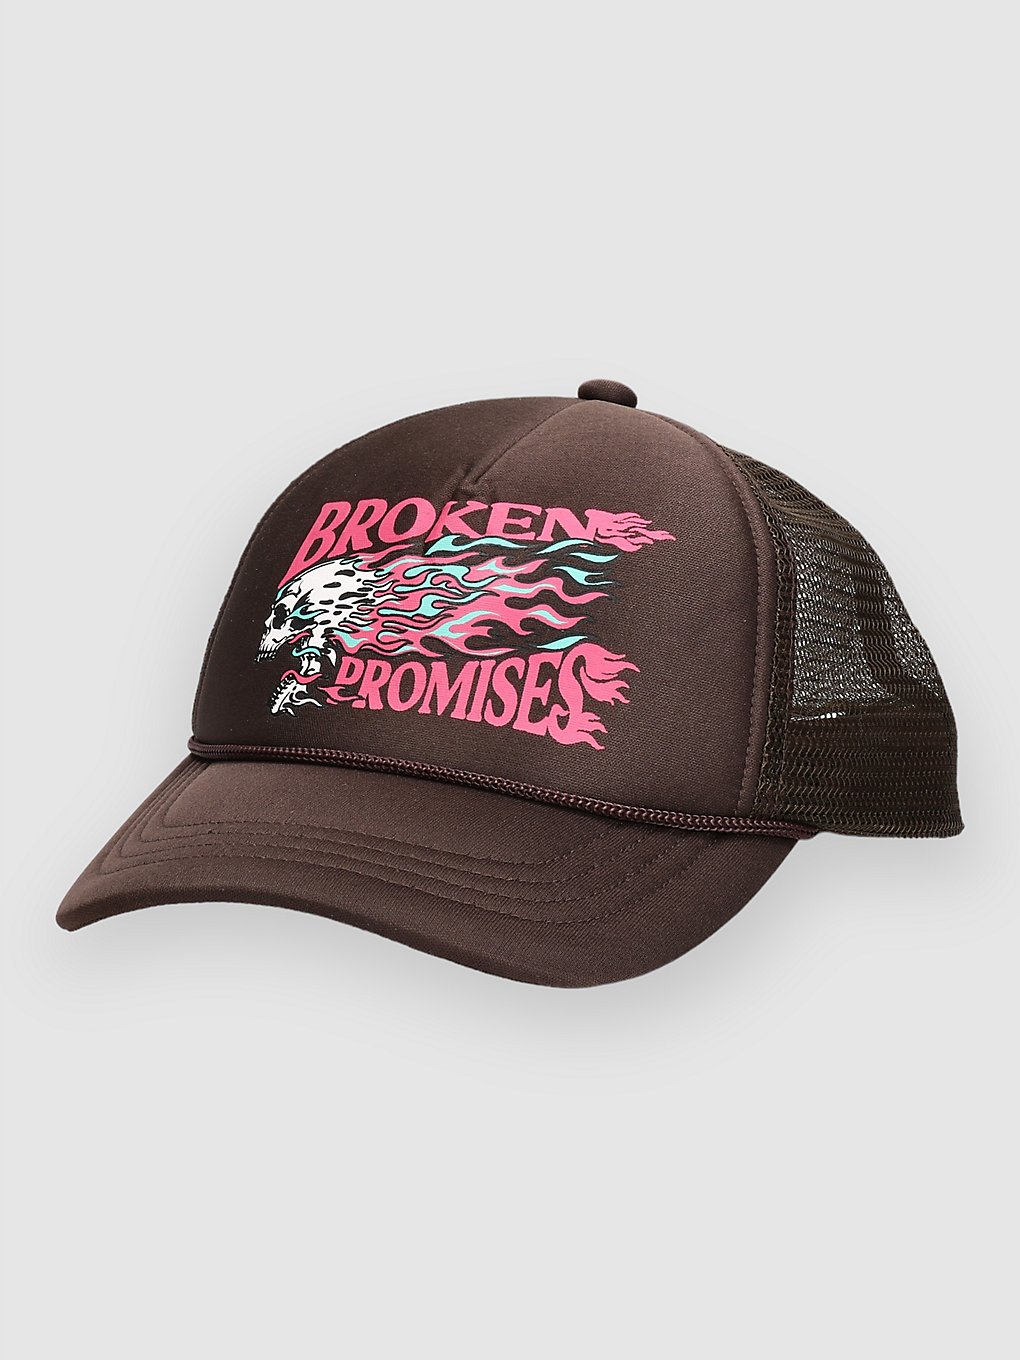 Broken Promises Sound Check Trucker Cap brown kaufen